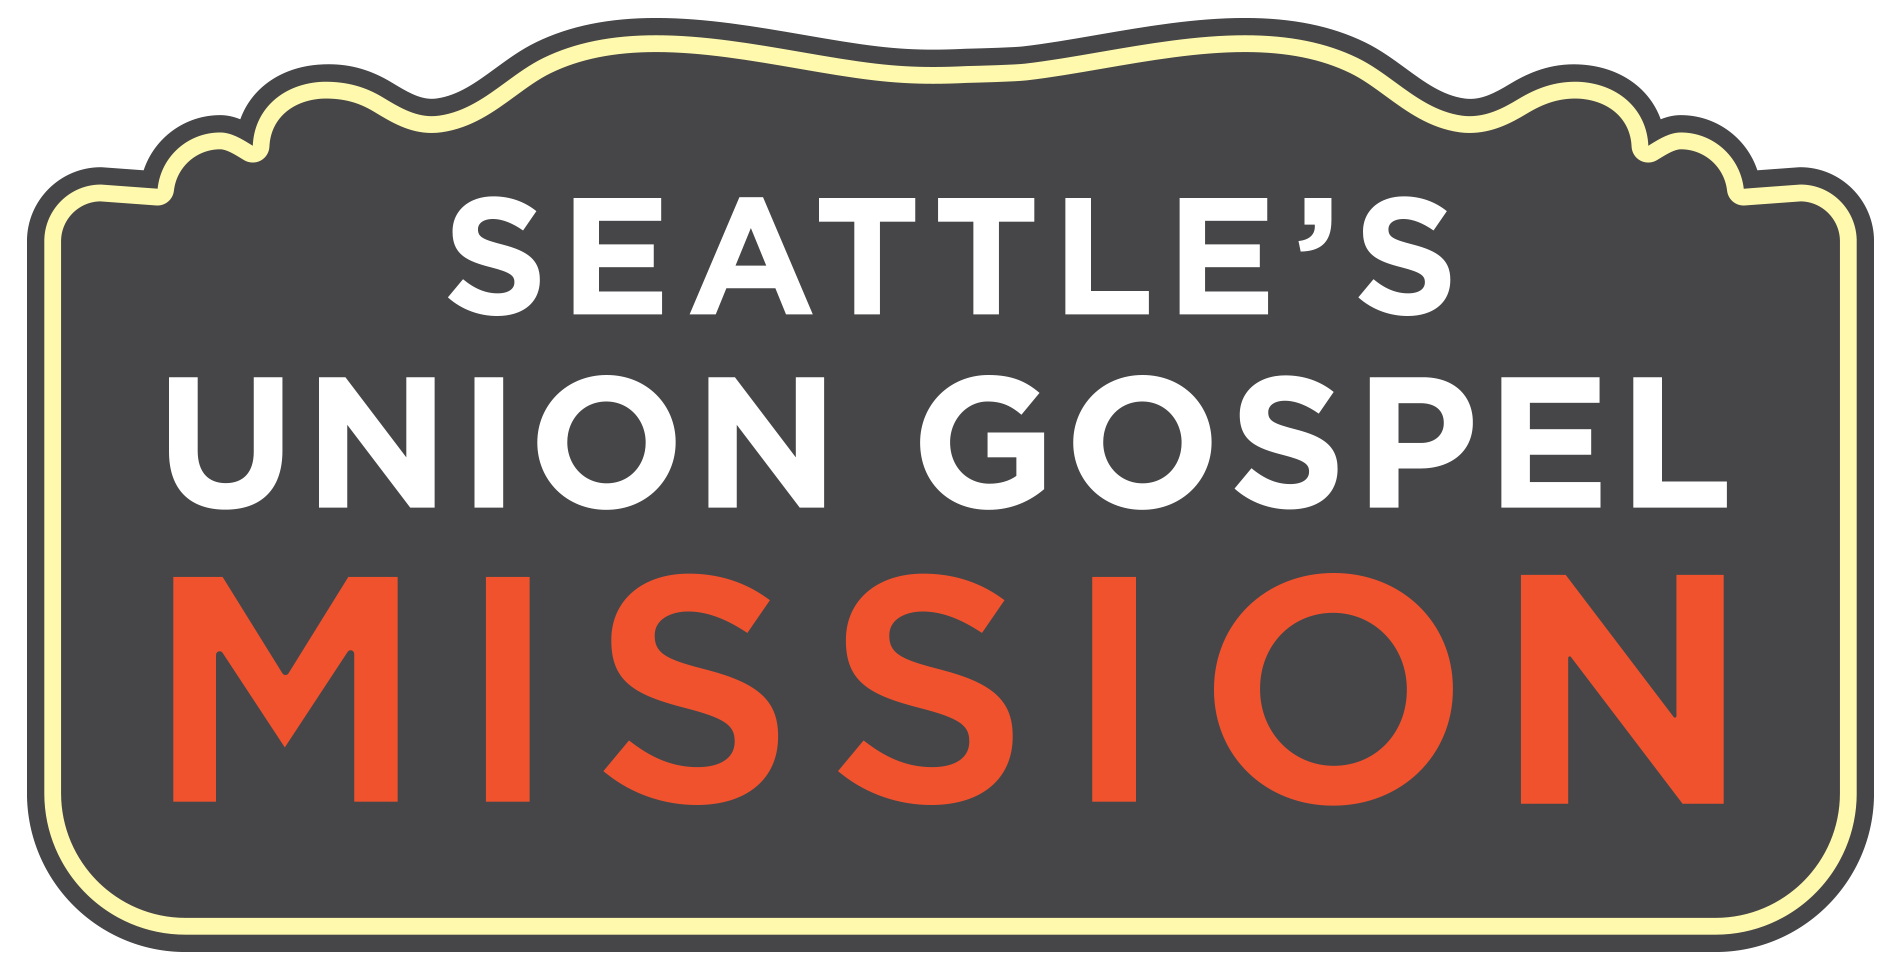 Union Gospel Mission logo